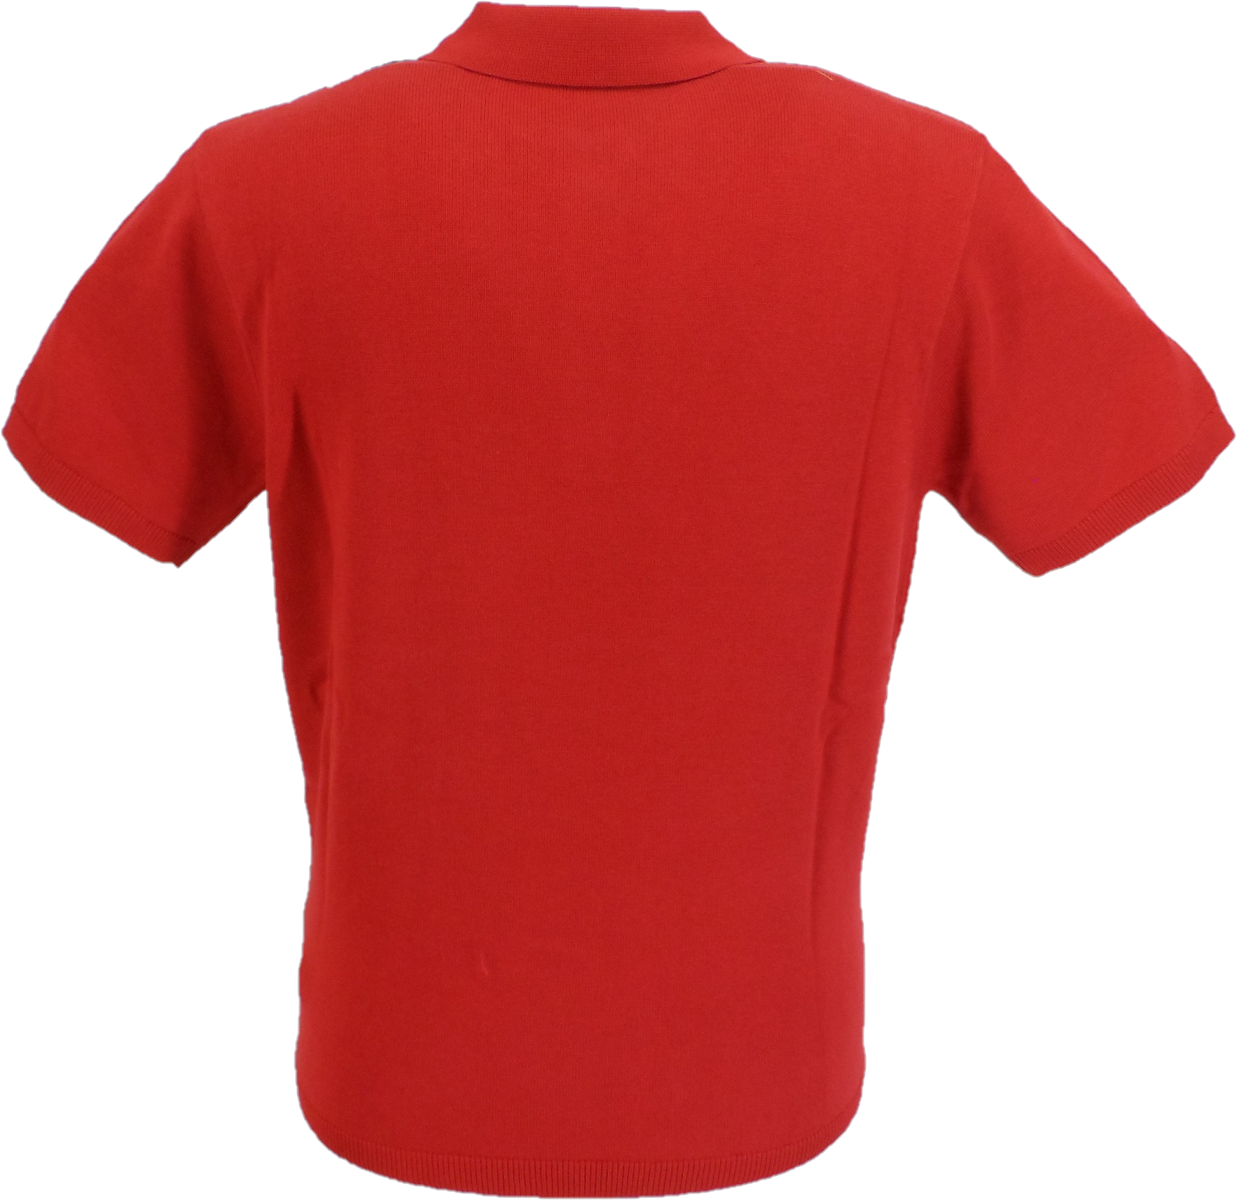 Gabicci Vintage Mens Garnet Red Textured Knitted Polo Shirt